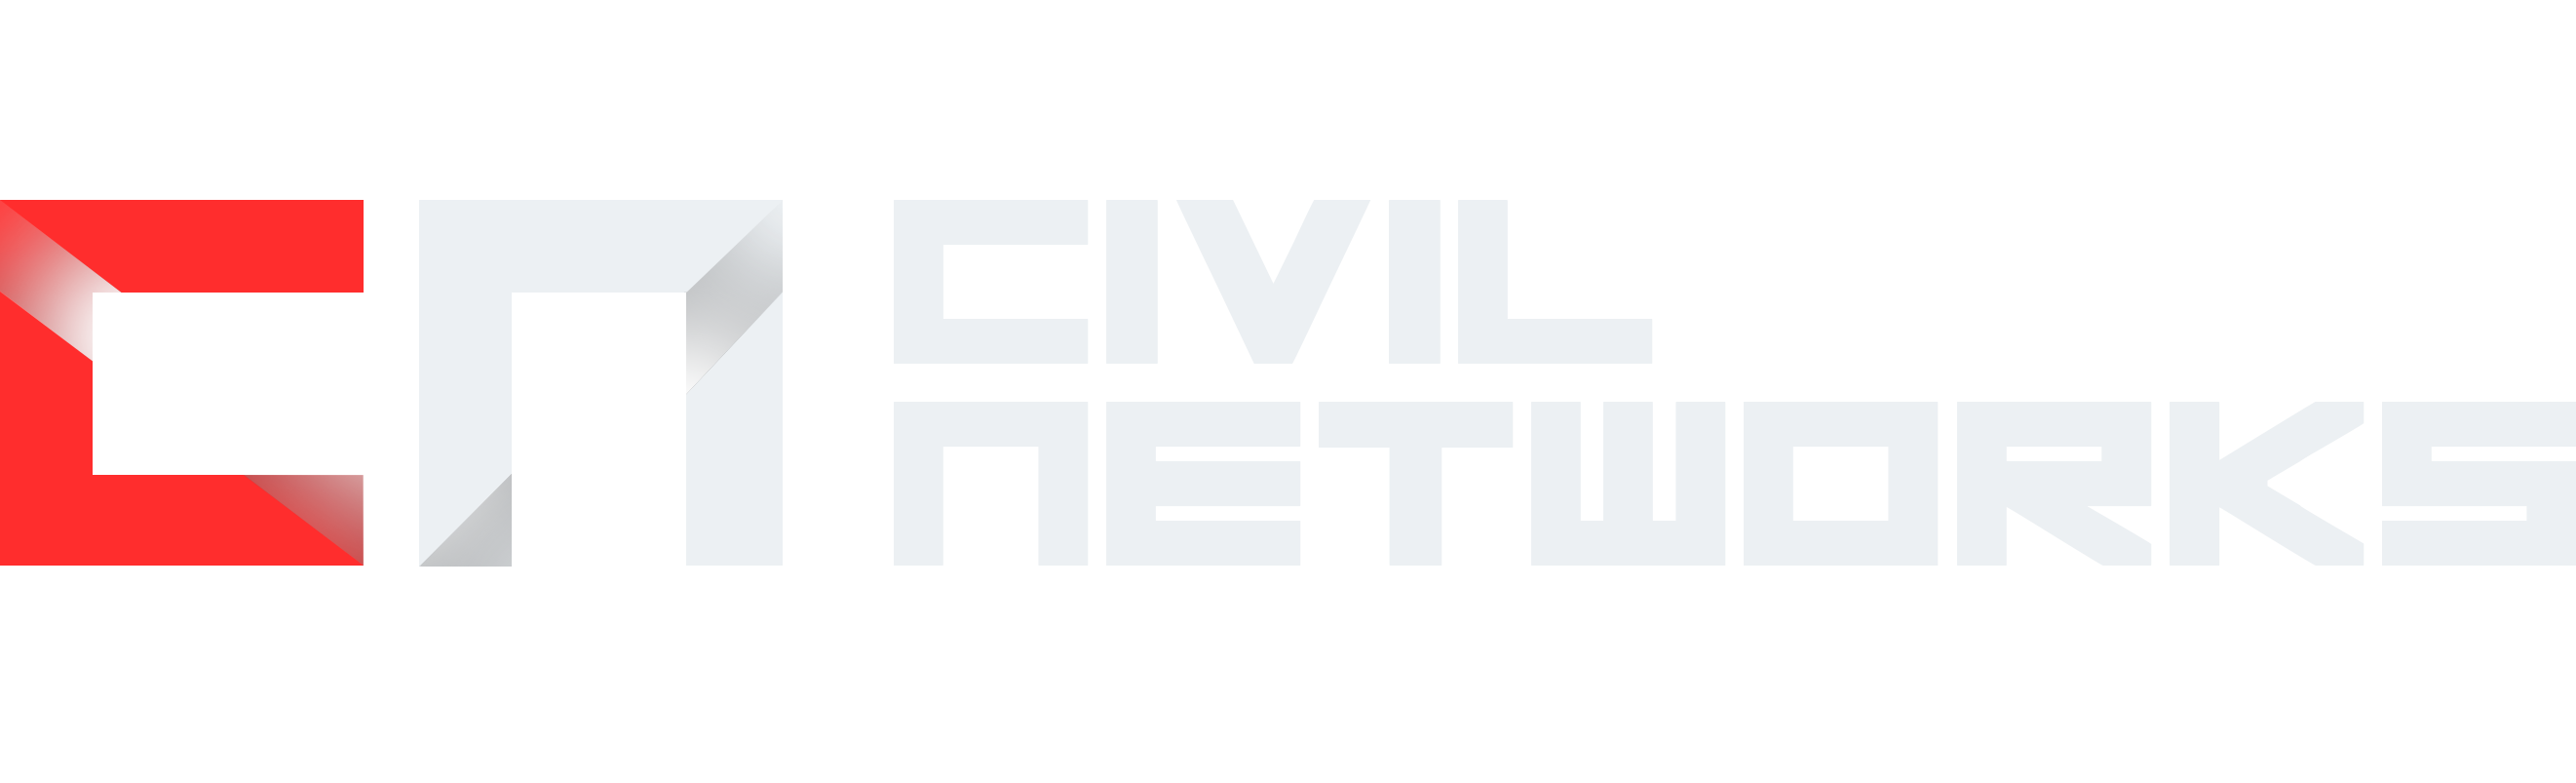 Civil Networks Community